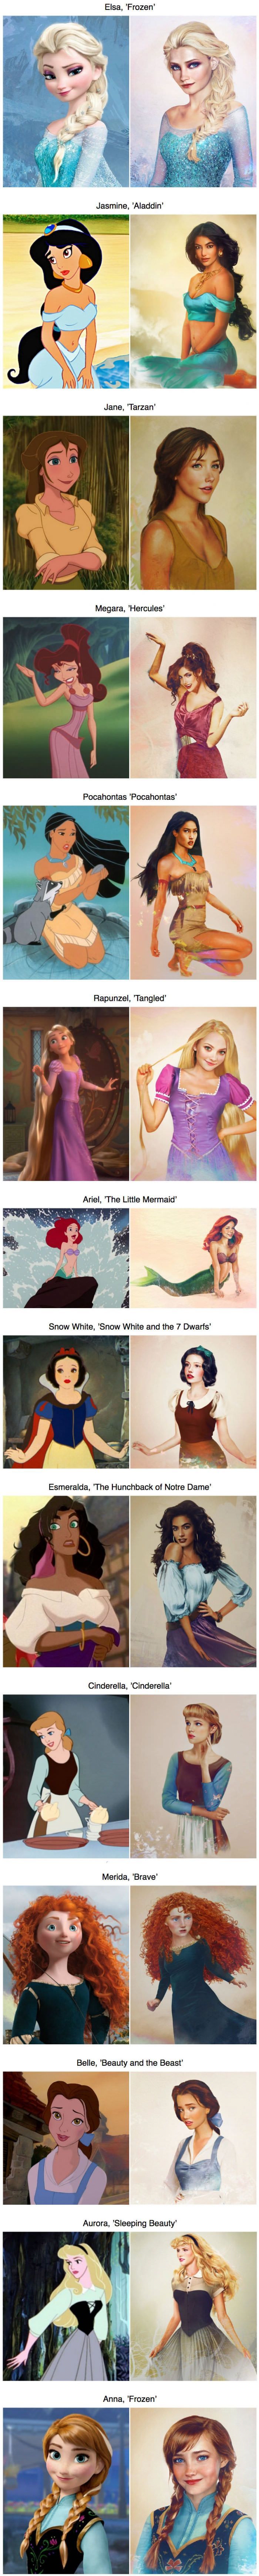 What the real Disney princesses looked like (By Jirka Väätäinen)